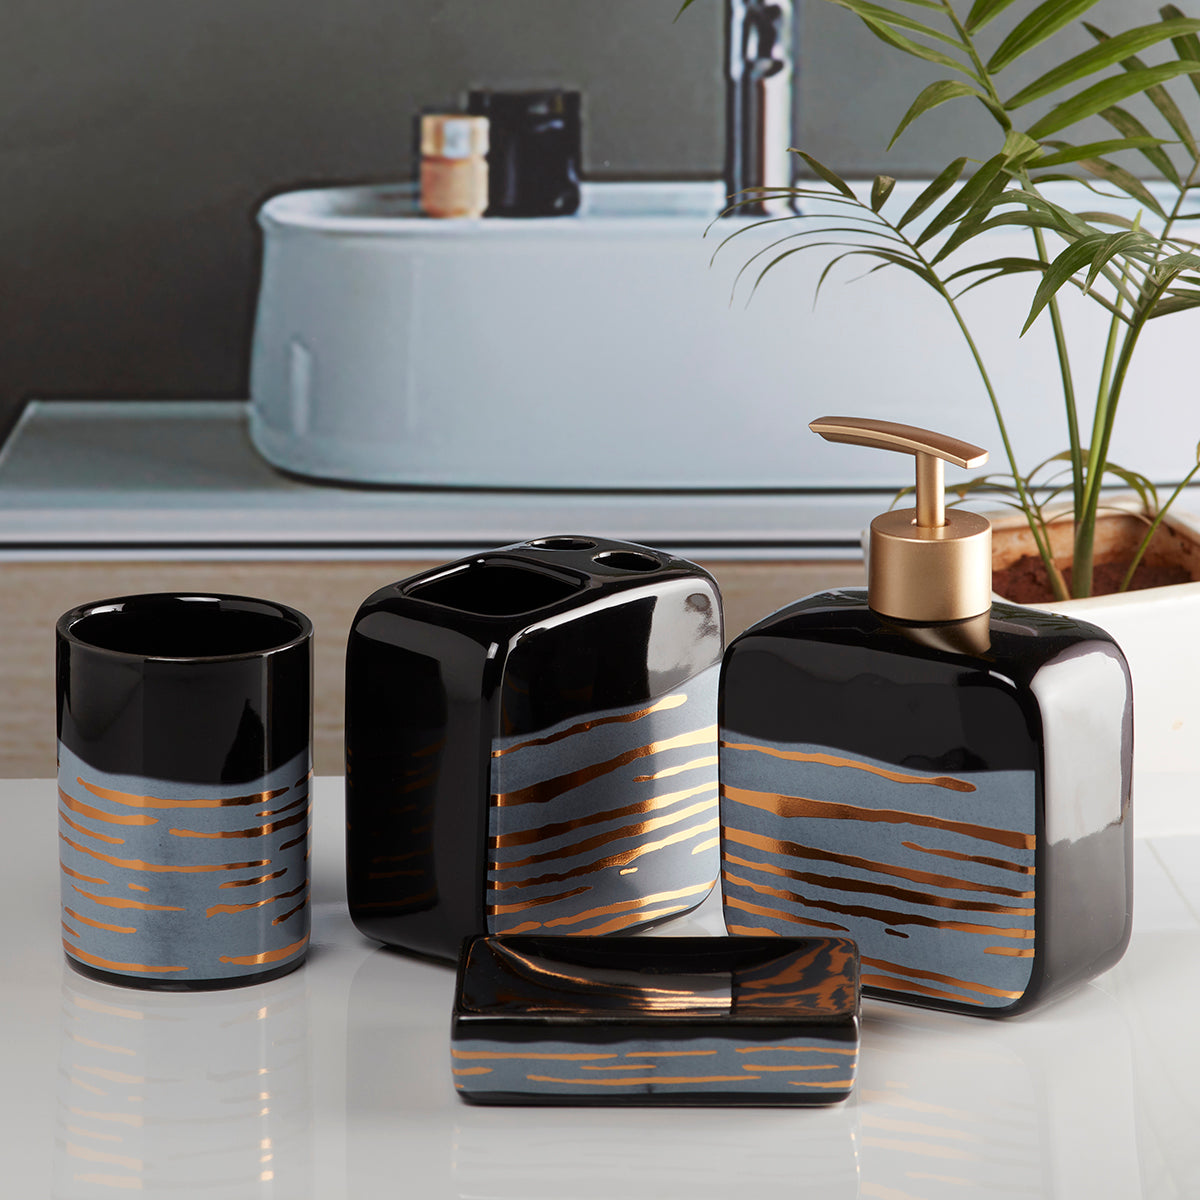 Ceramic Bathroom Accessories Set of 4 Bath Set with Soap Dispenser (10074)